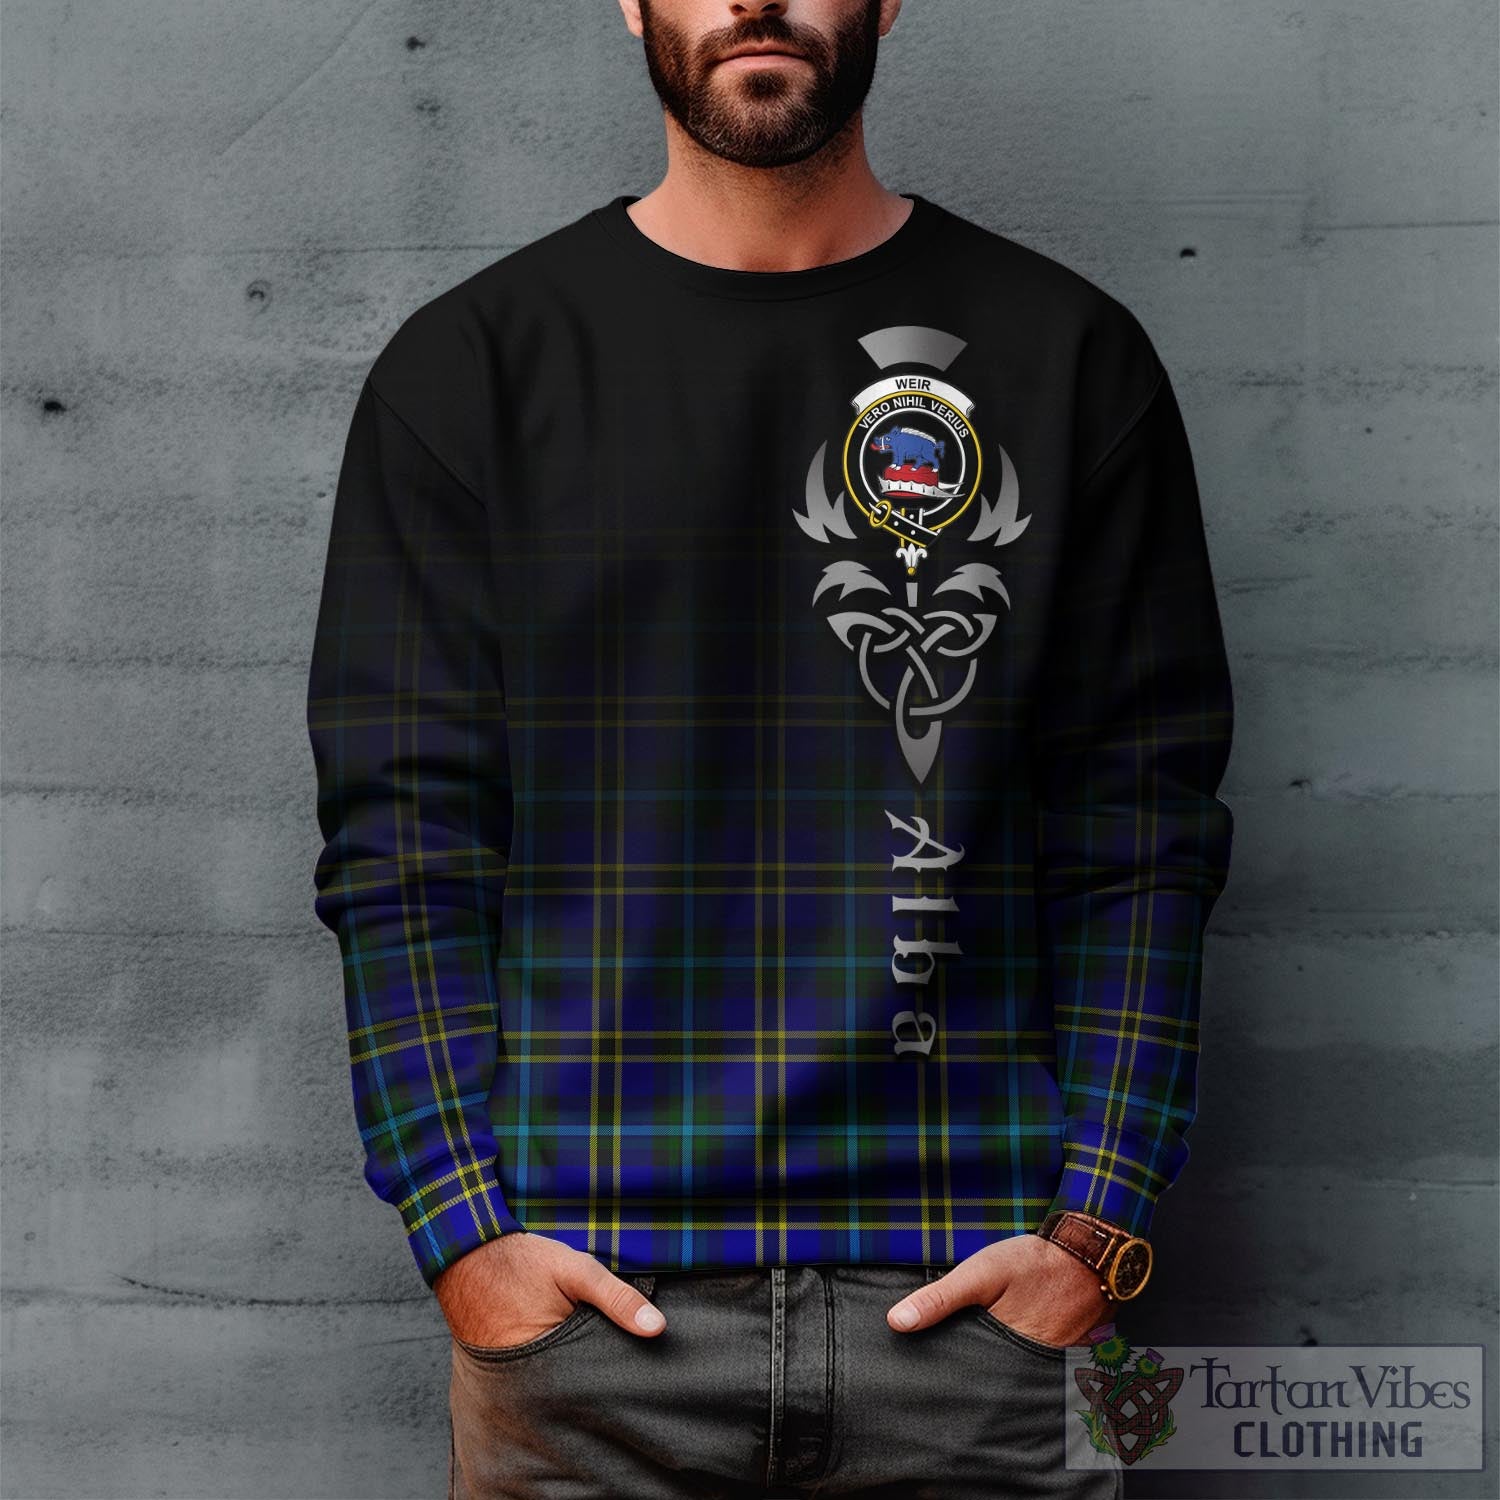 Tartan Vibes Clothing Weir Modern Tartan Sweatshirt Featuring Alba Gu Brath Family Crest Celtic Inspired